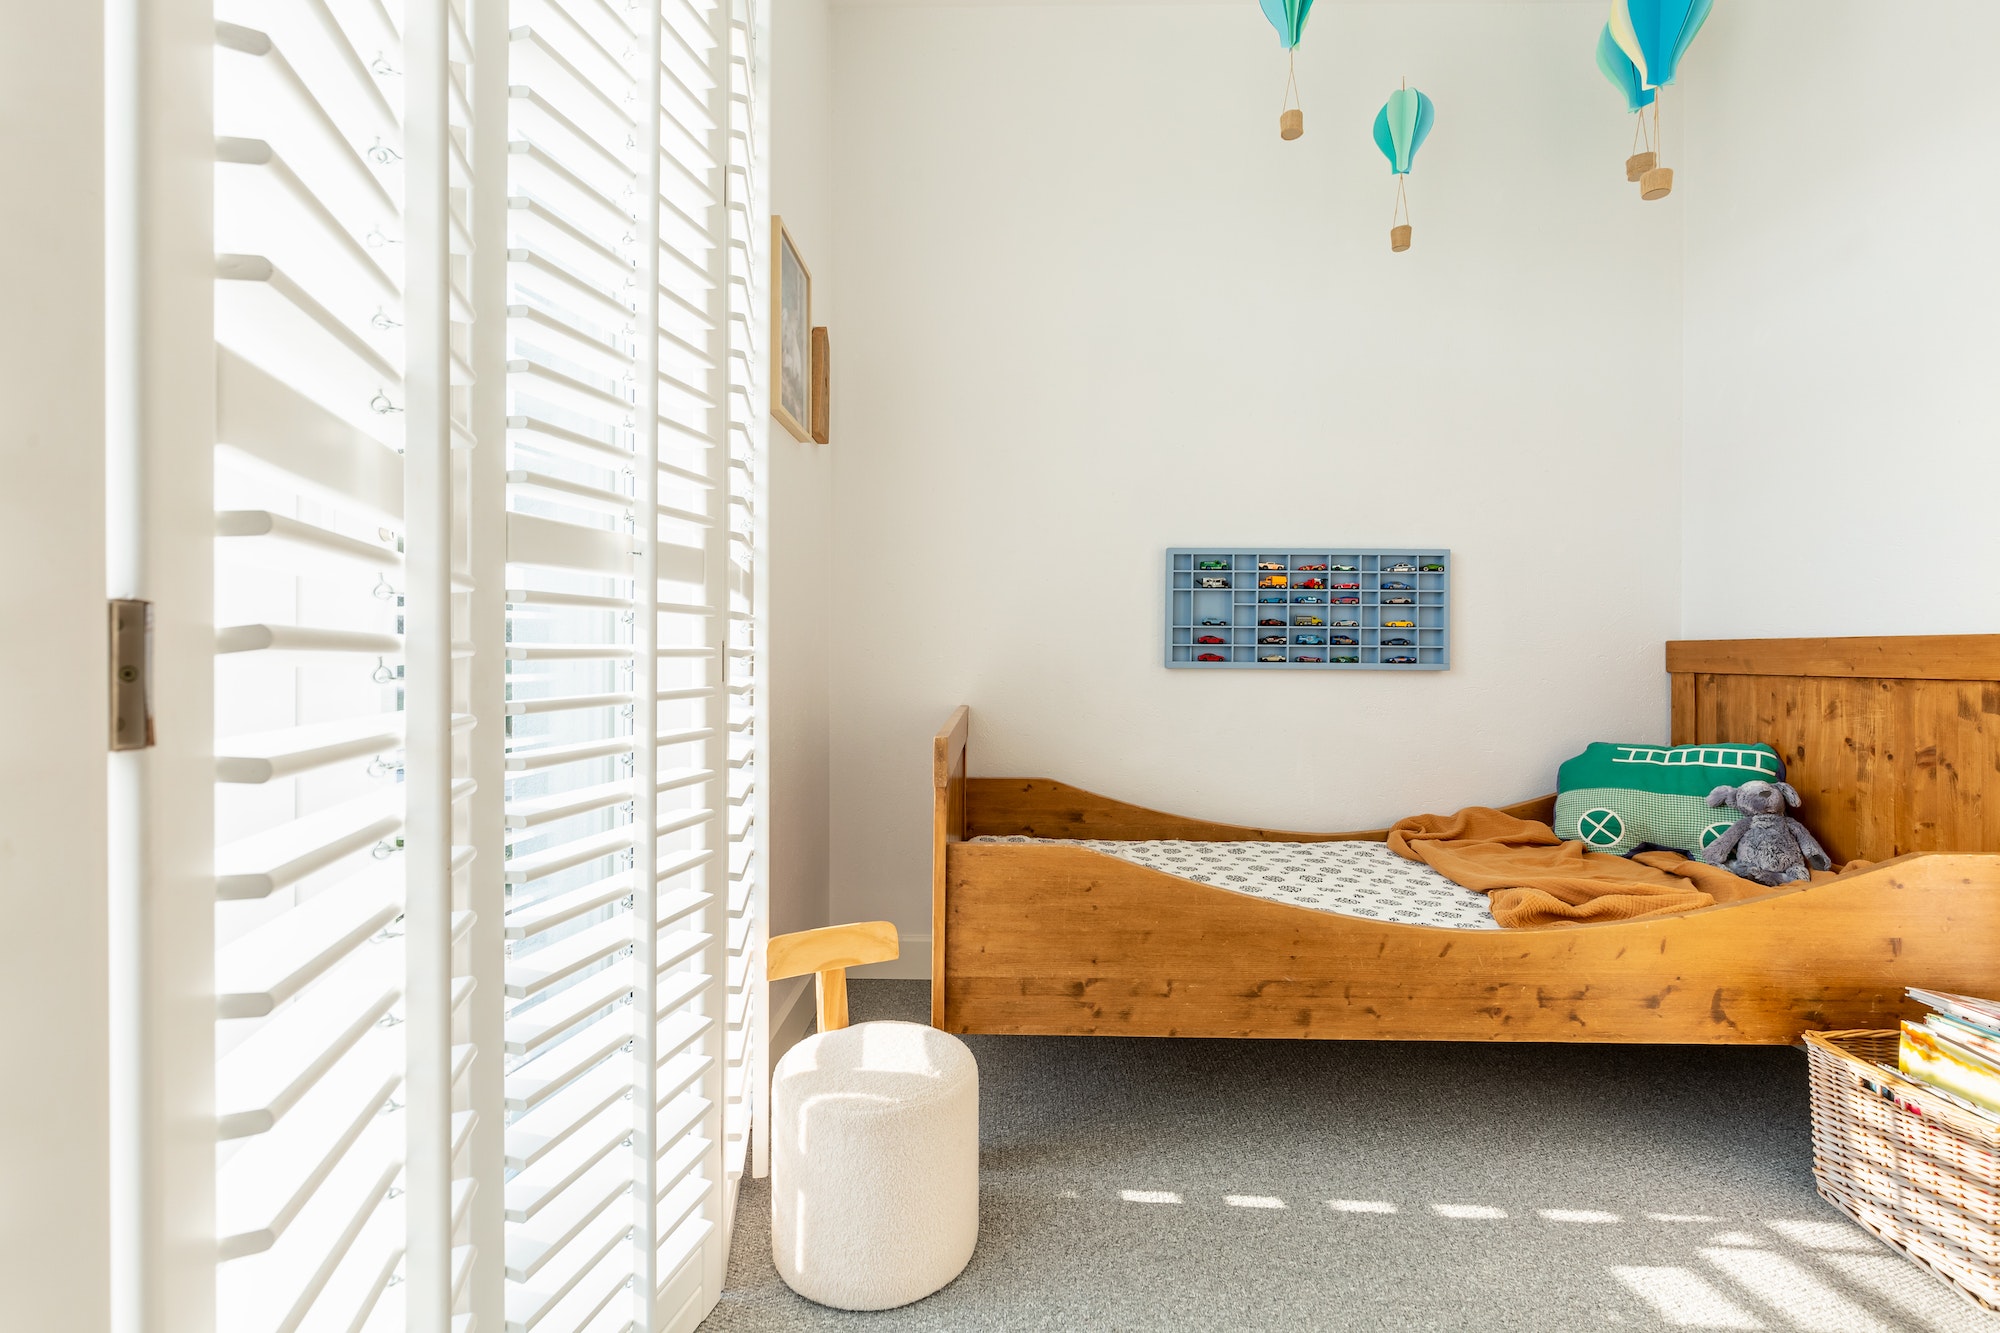 Cute scandinavian style kid's bedroom with single bed